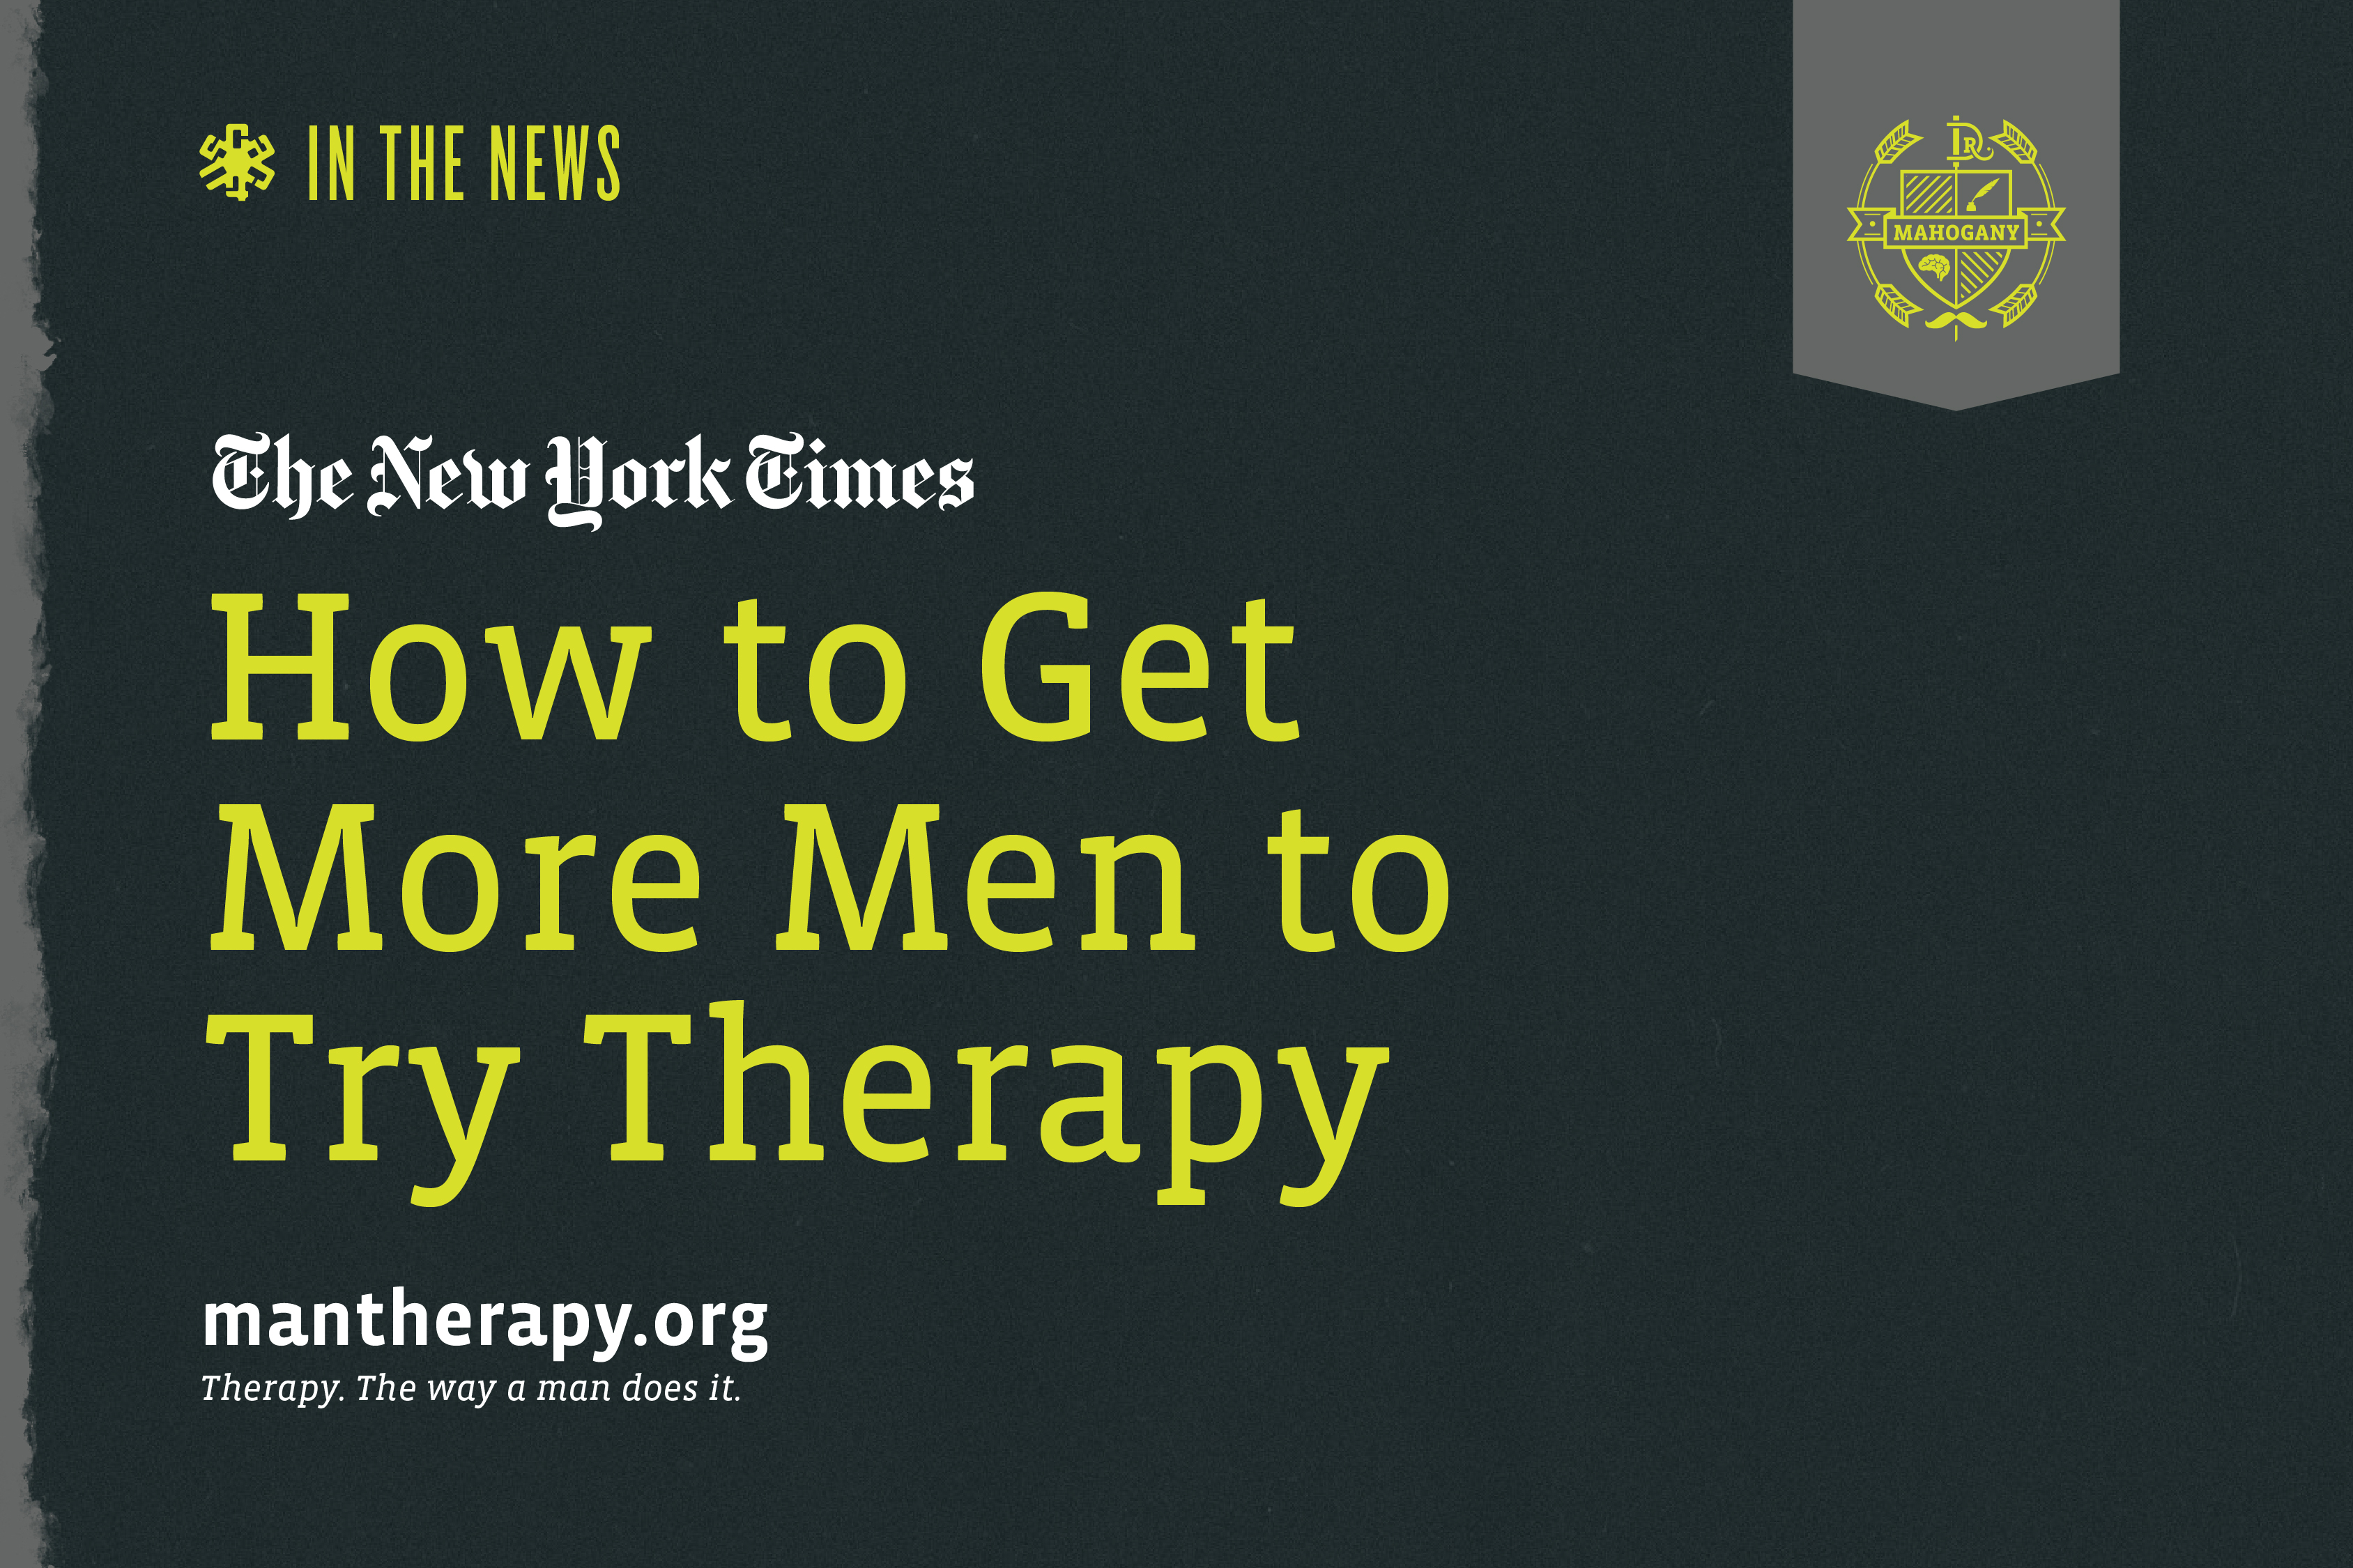 mantherapyNYT-inthenews_v1.0-blog_News Blog